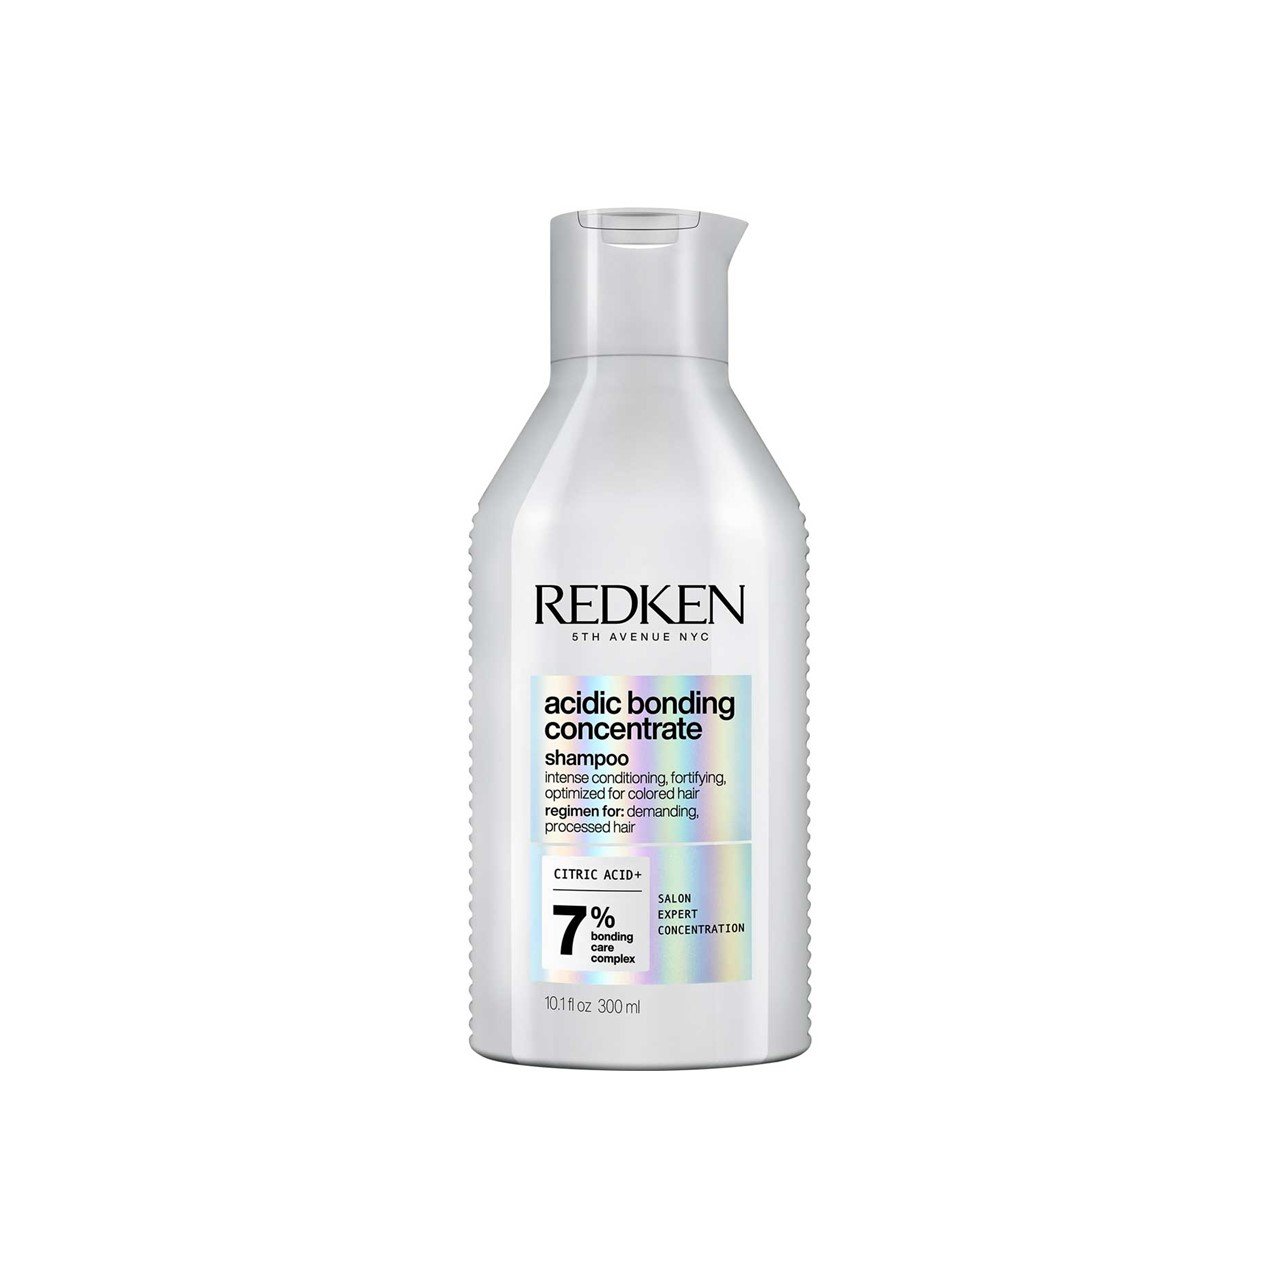 Redken Acidic Bonding Concentrate Shampoo 300ml (10.14fl oz)